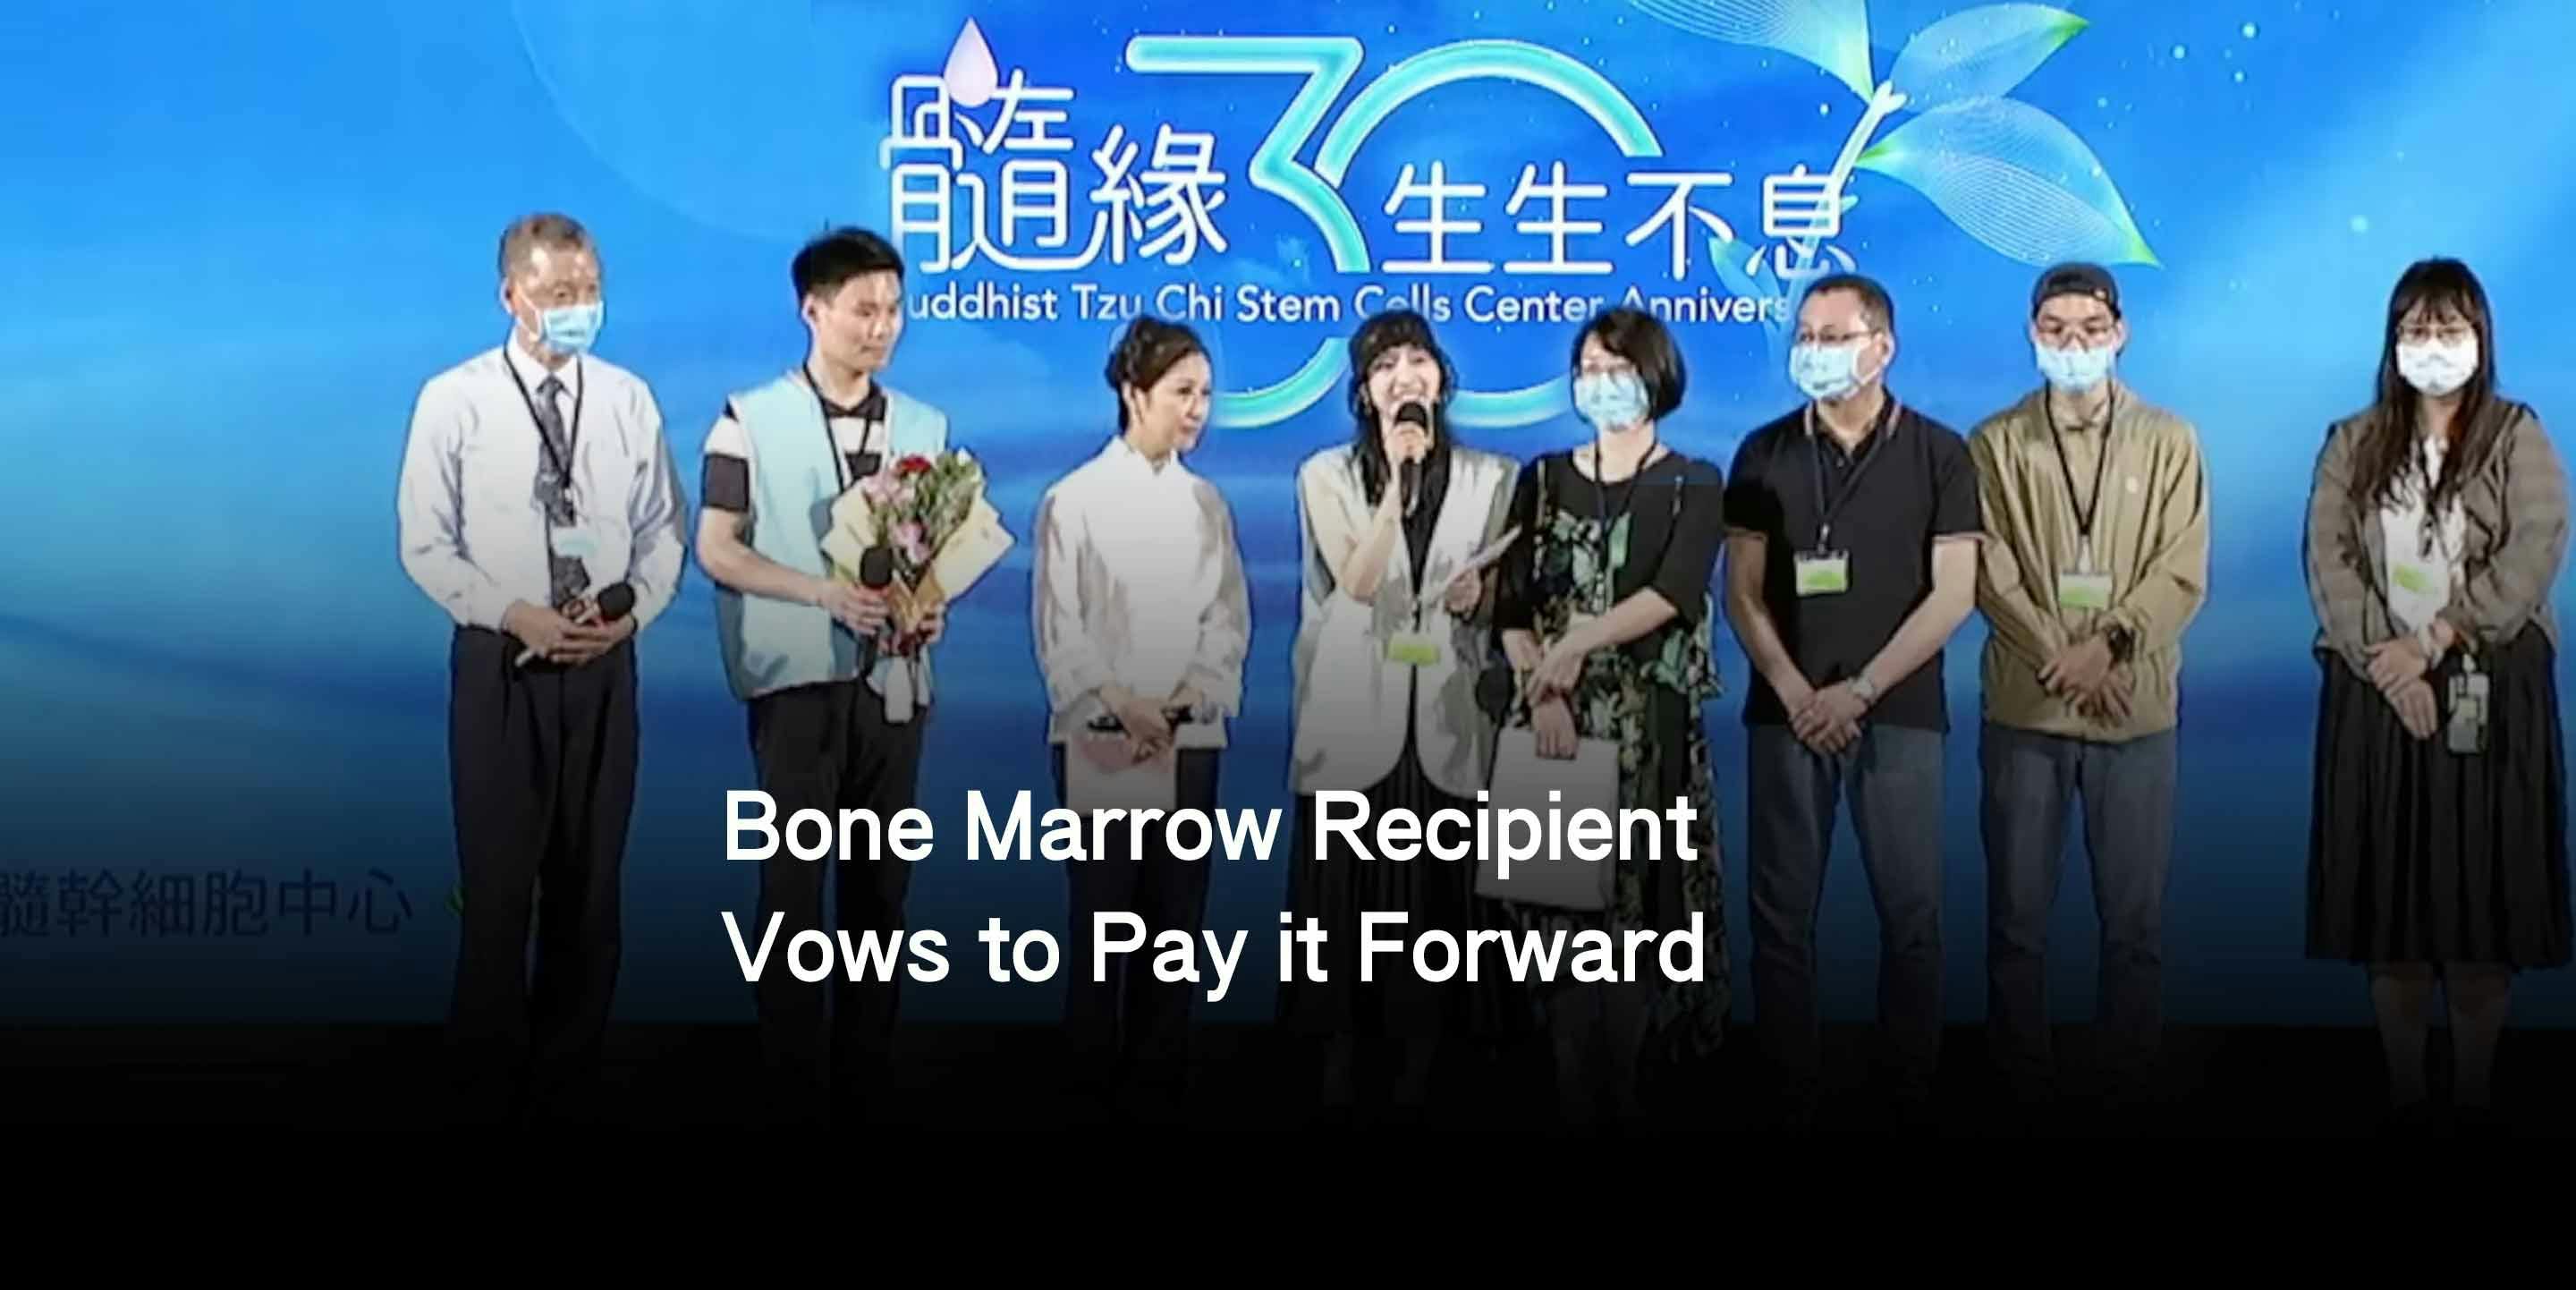 Bone Marrow Recipient Vows to Pay it Forward